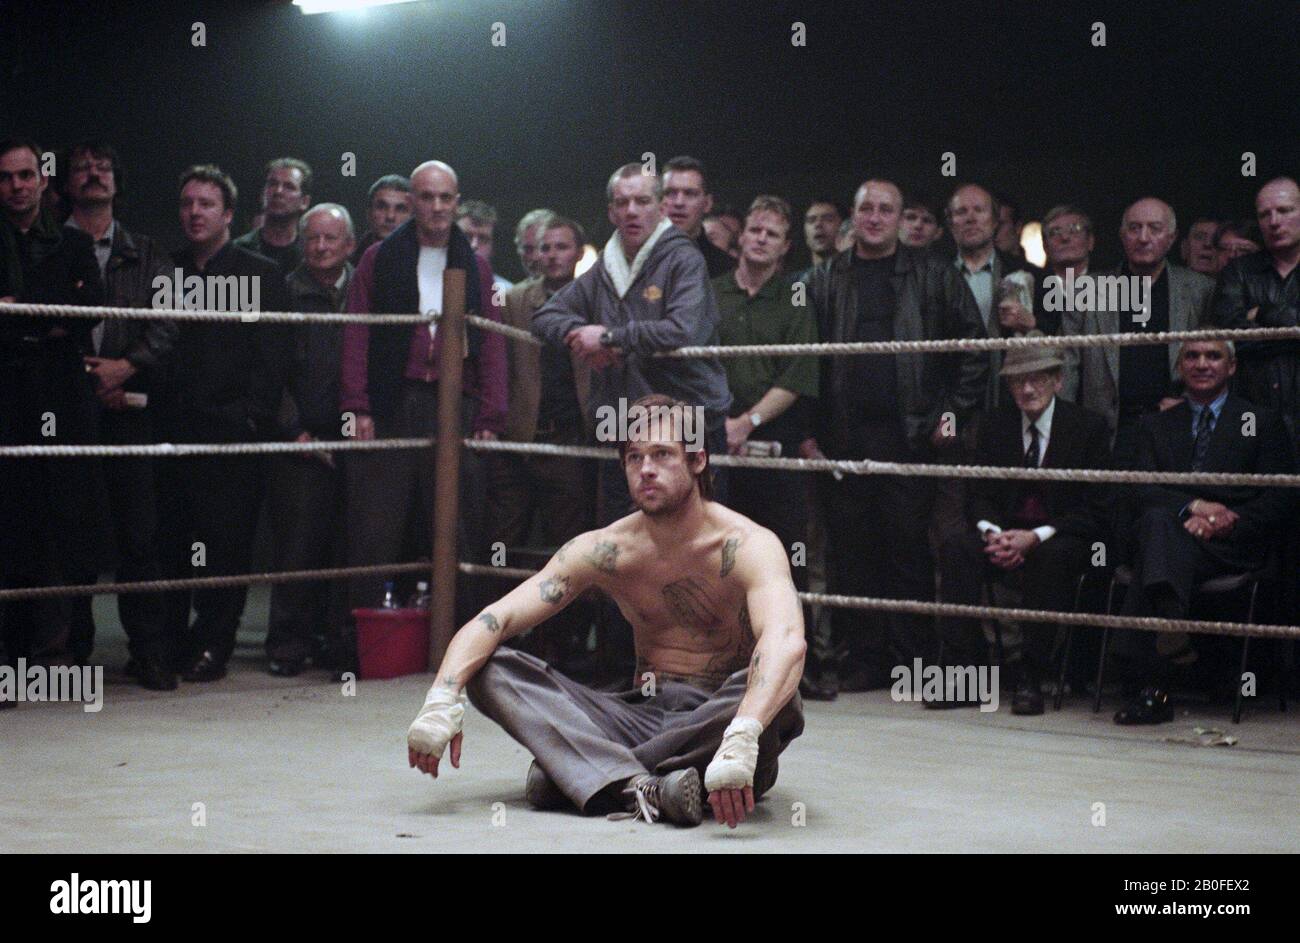 Snatch Year : 2000 UK / USA Director : Guy Ritchie Brad Pitt Stock Photo